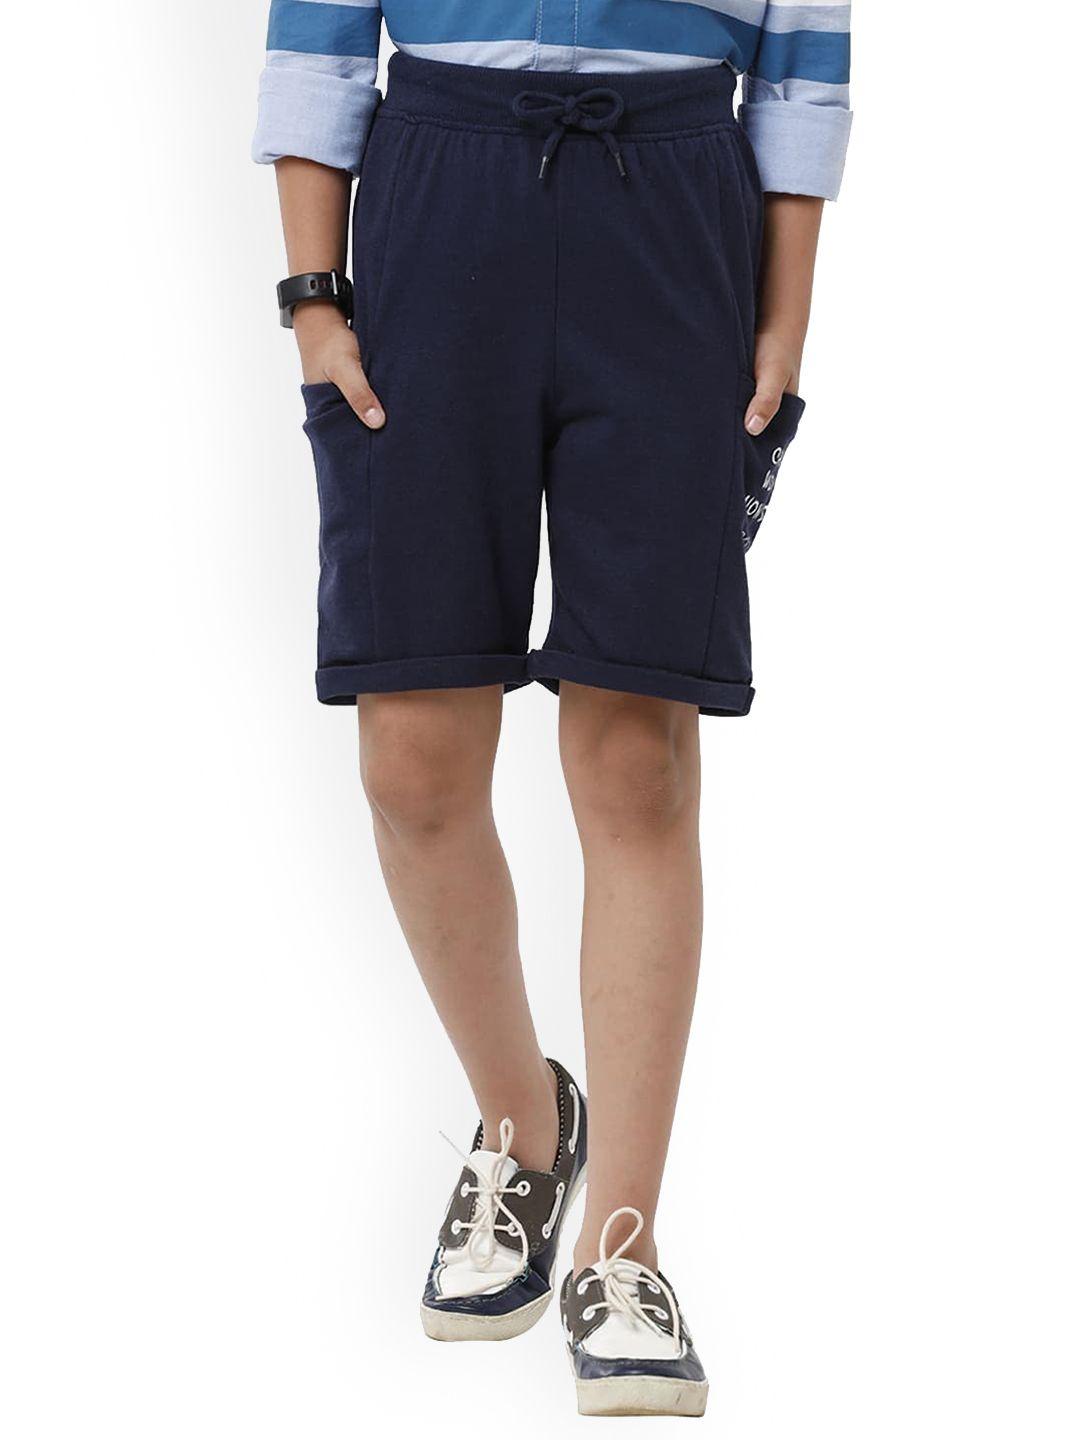 under fourteen only boys navy blue shorts